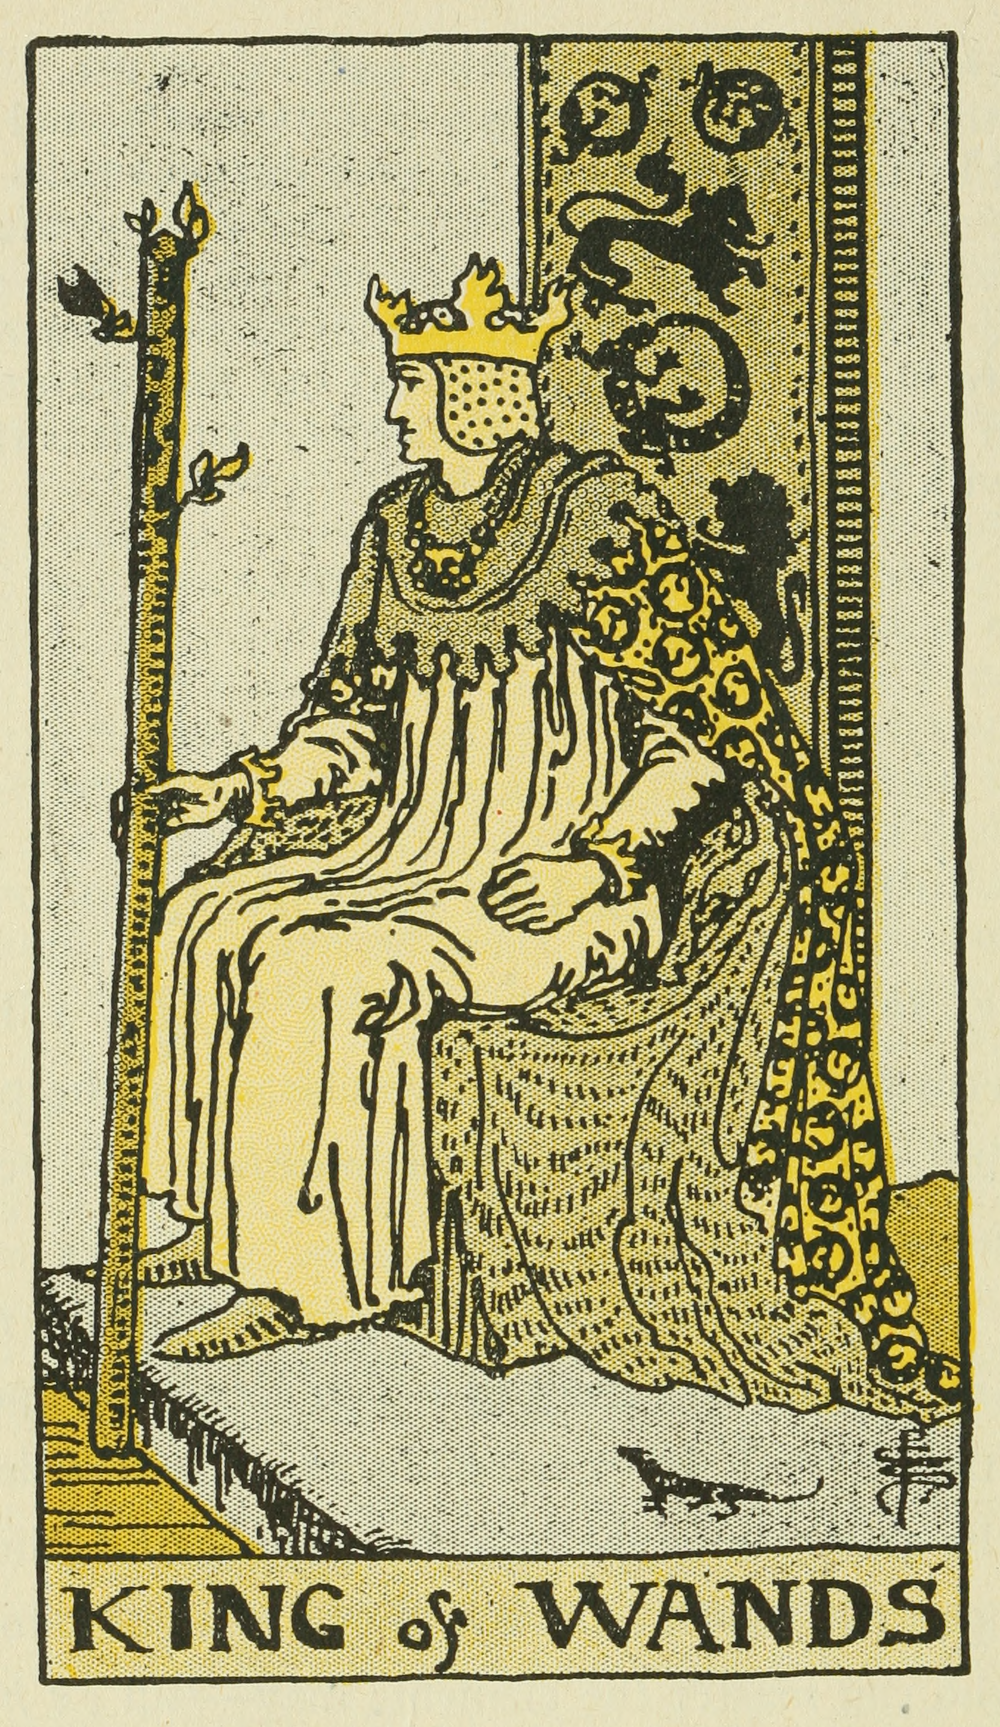 Queen of Wands - Wikipedia